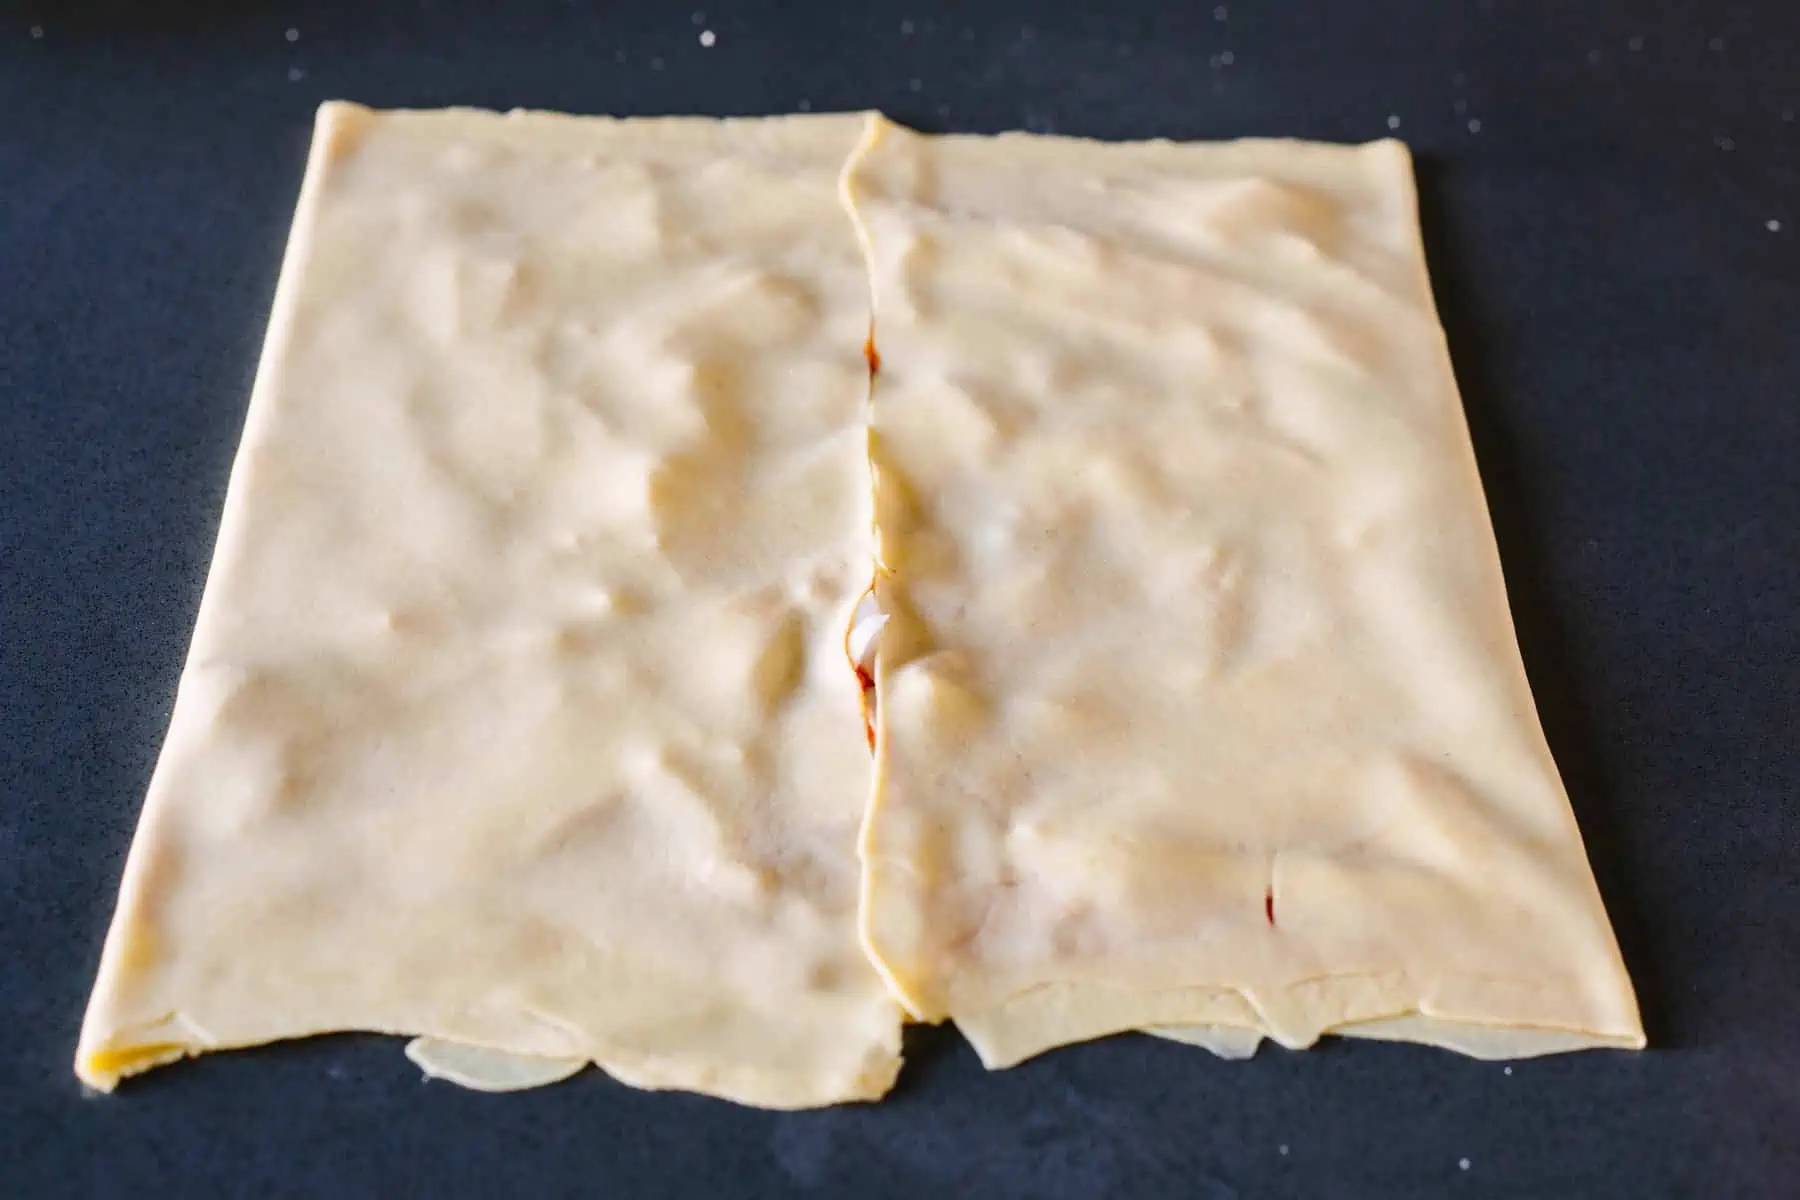 Bread dough folded over pizza sauce and mozzarella to make layers.